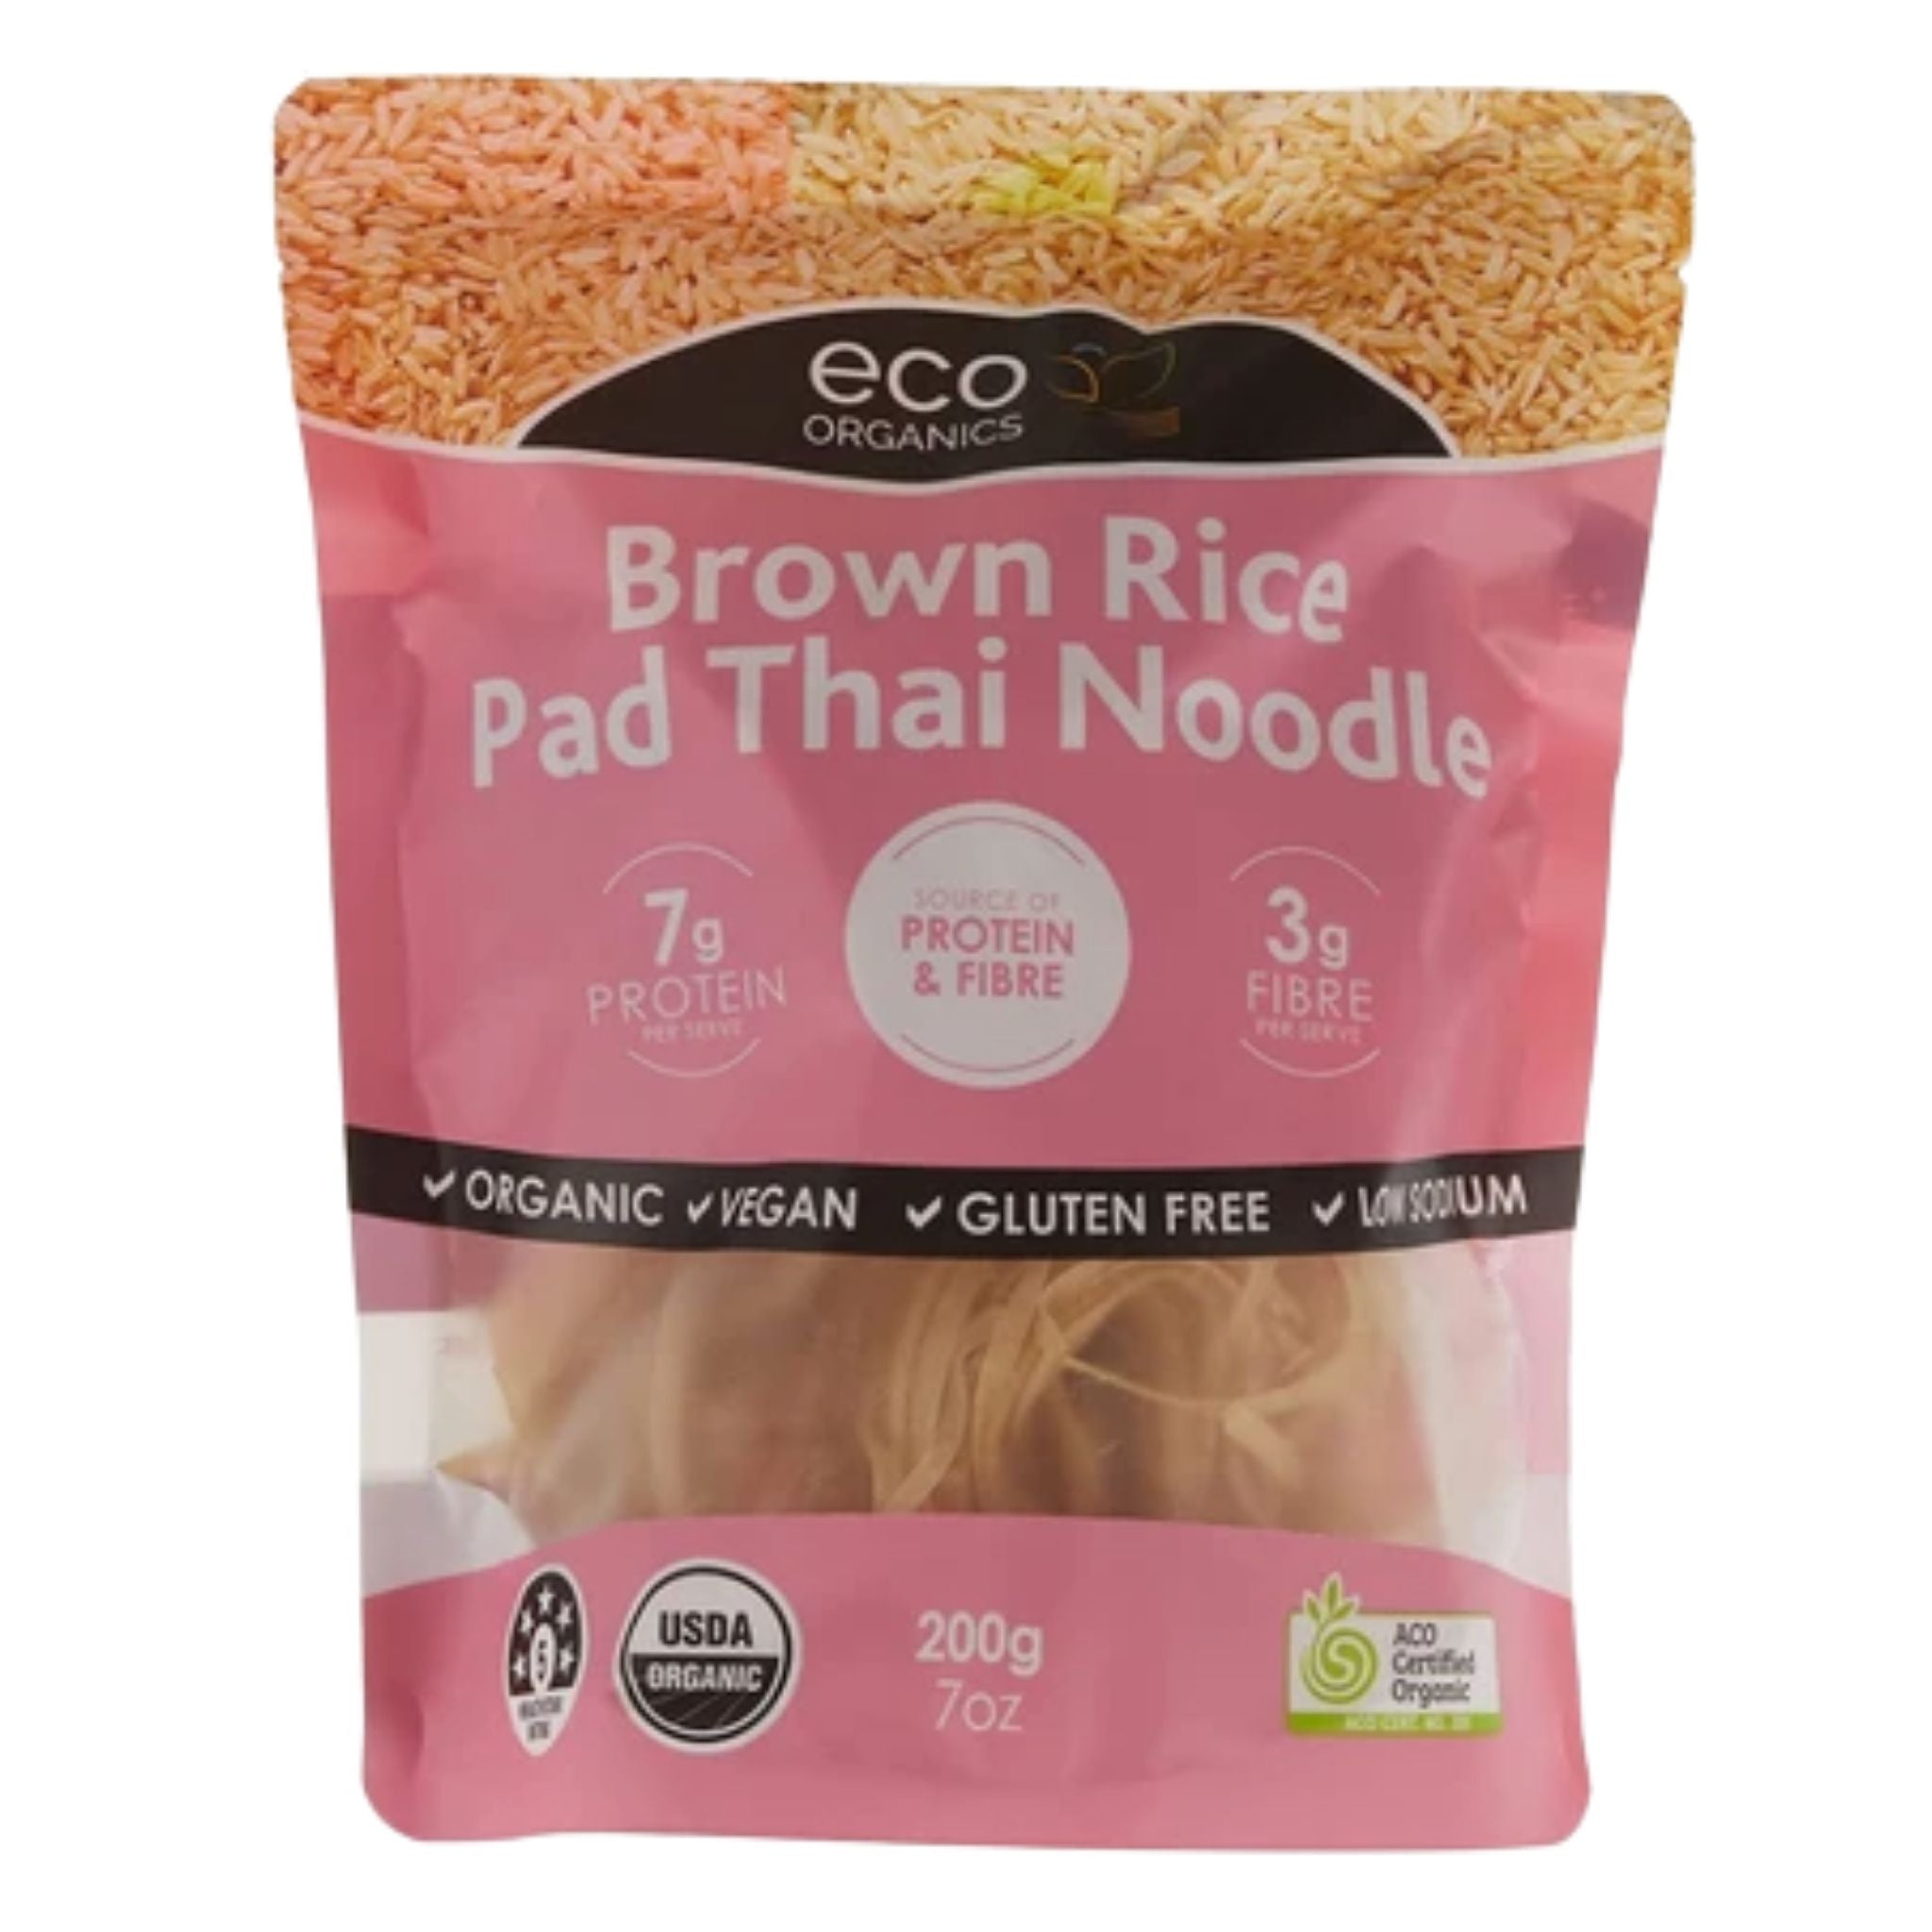 Brown Rice Pad Thai Noodles - Eco Organics. 200gr